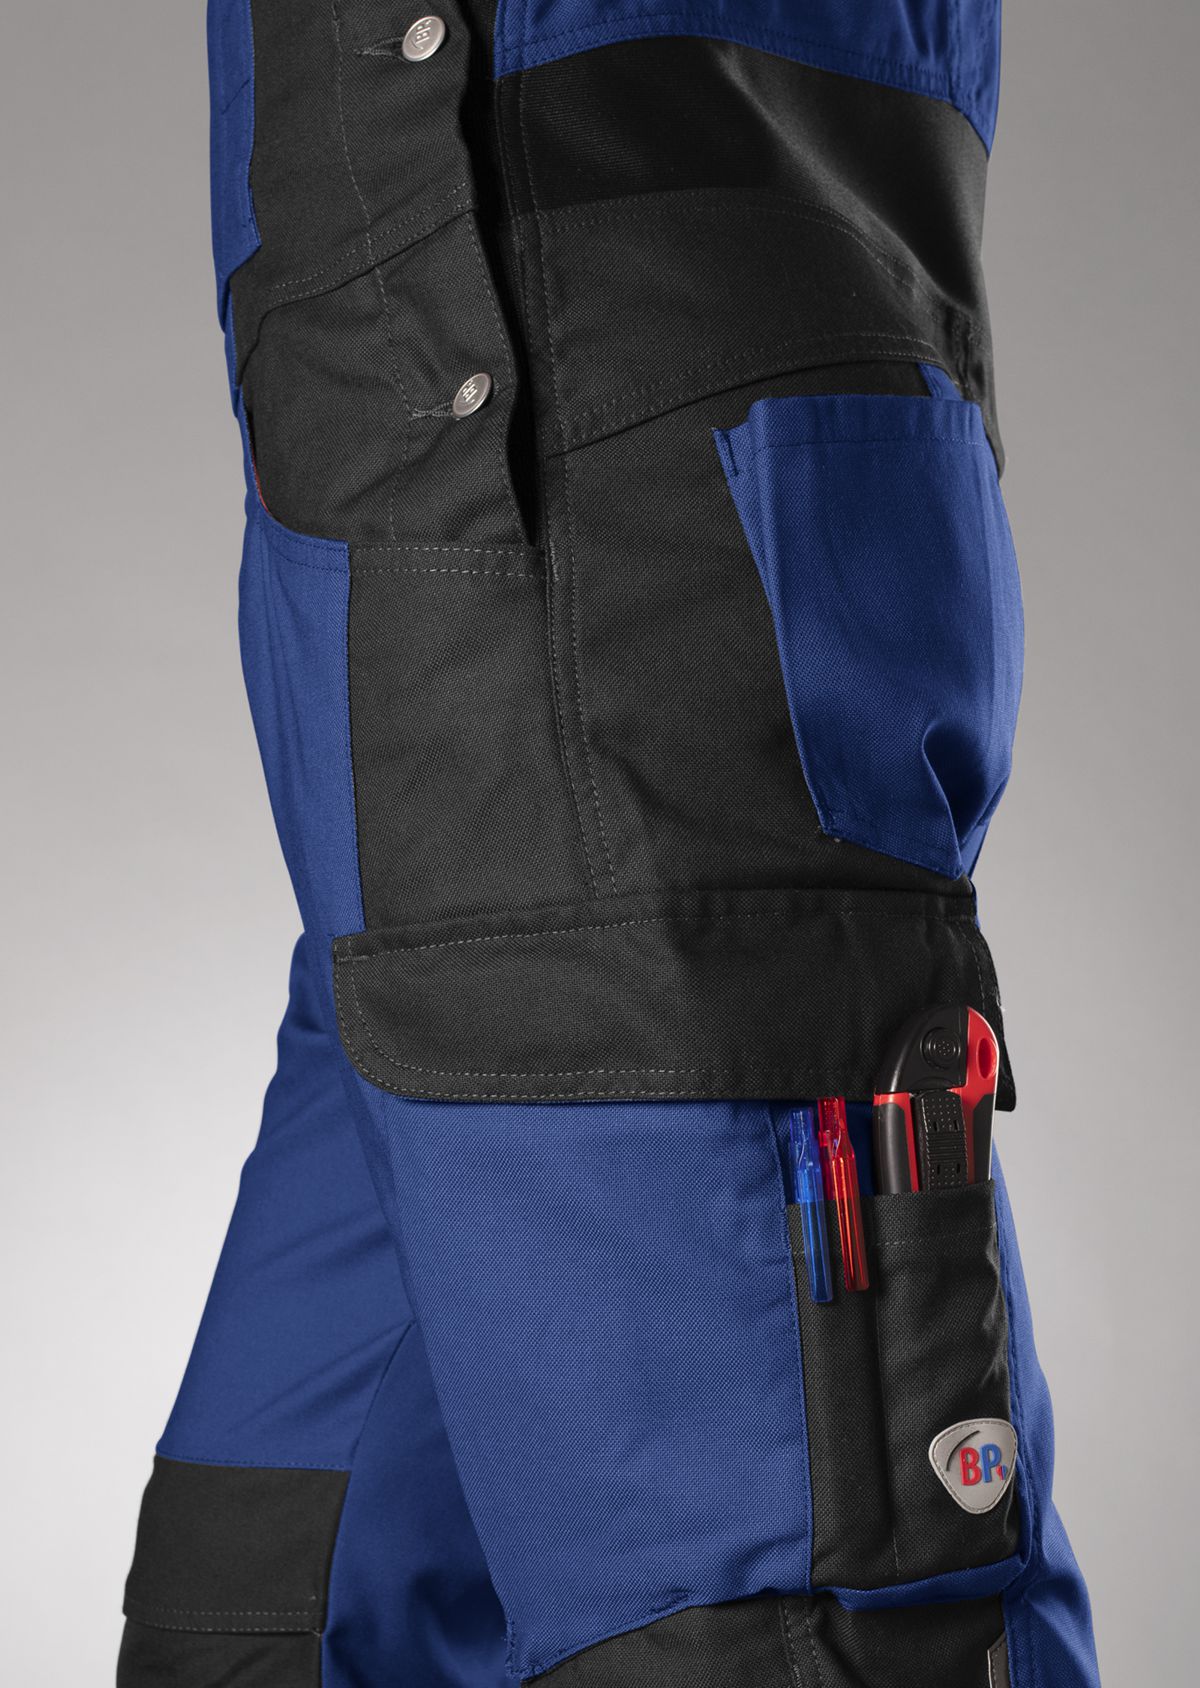 BP® Robust bib & brace with knee pad pockets